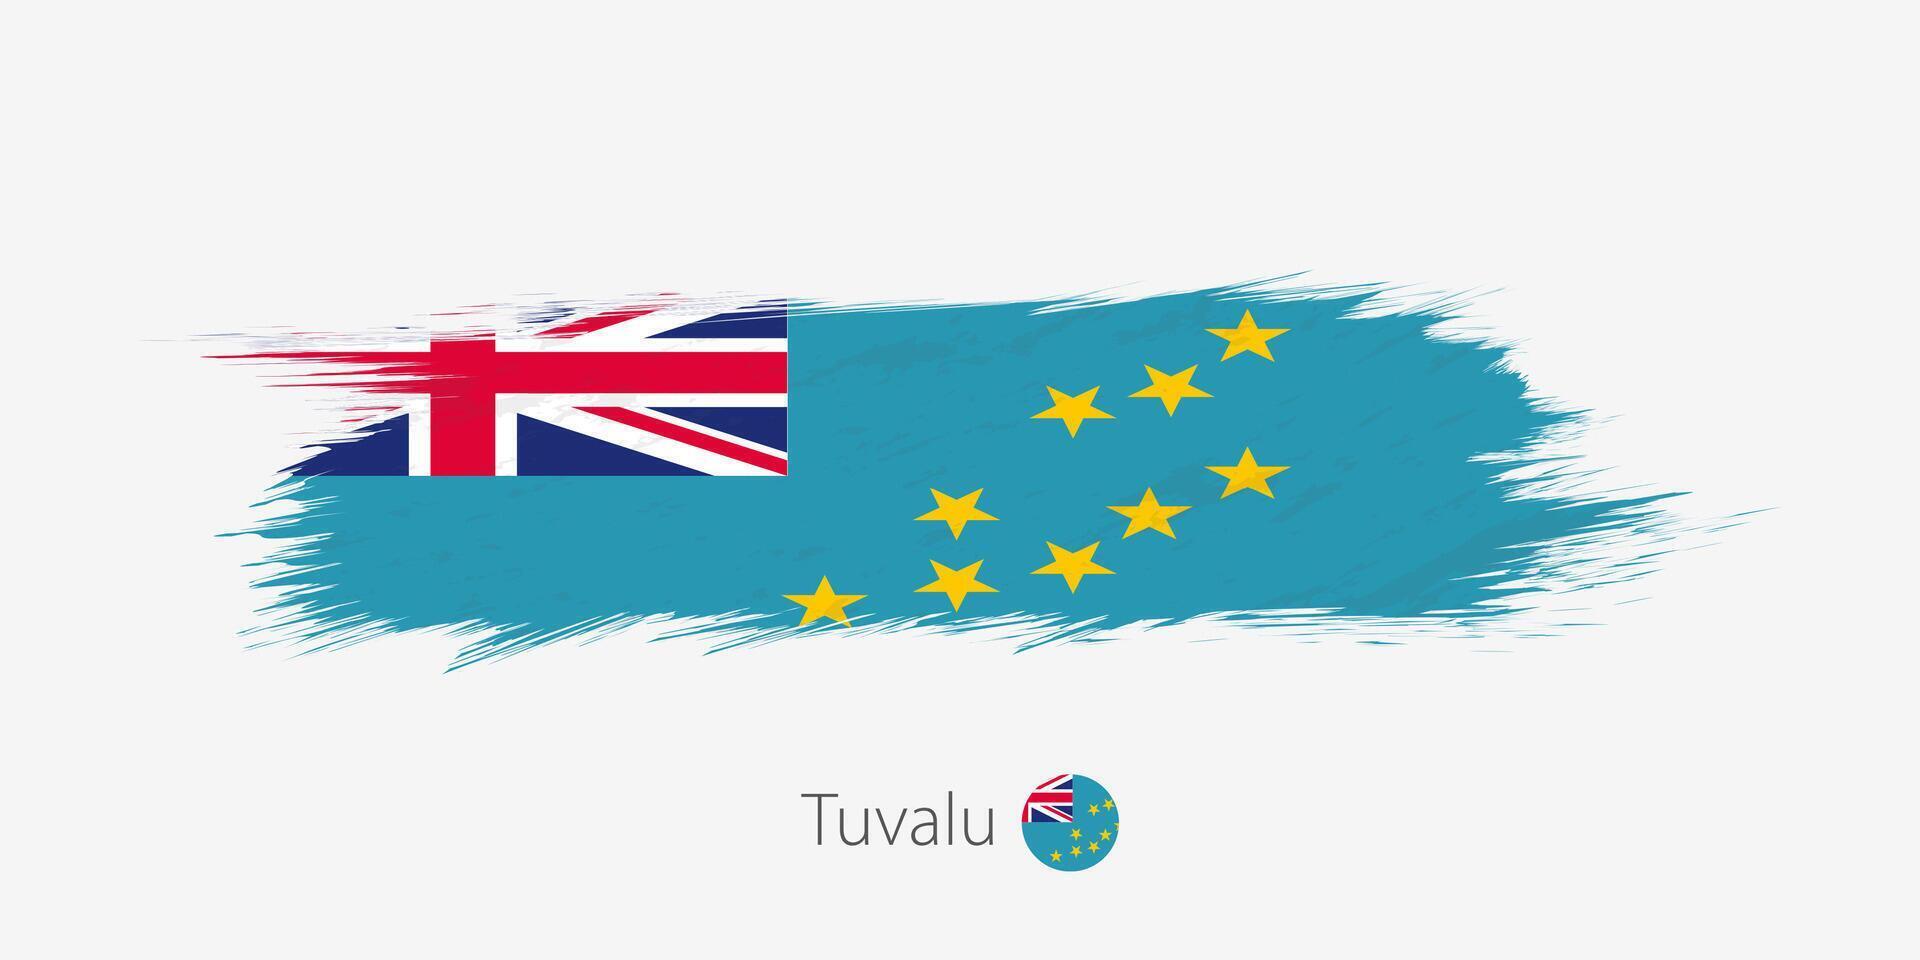 flagga av tuvalu, grunge abstrakt borsta stroke på grå bakgrund. vektor